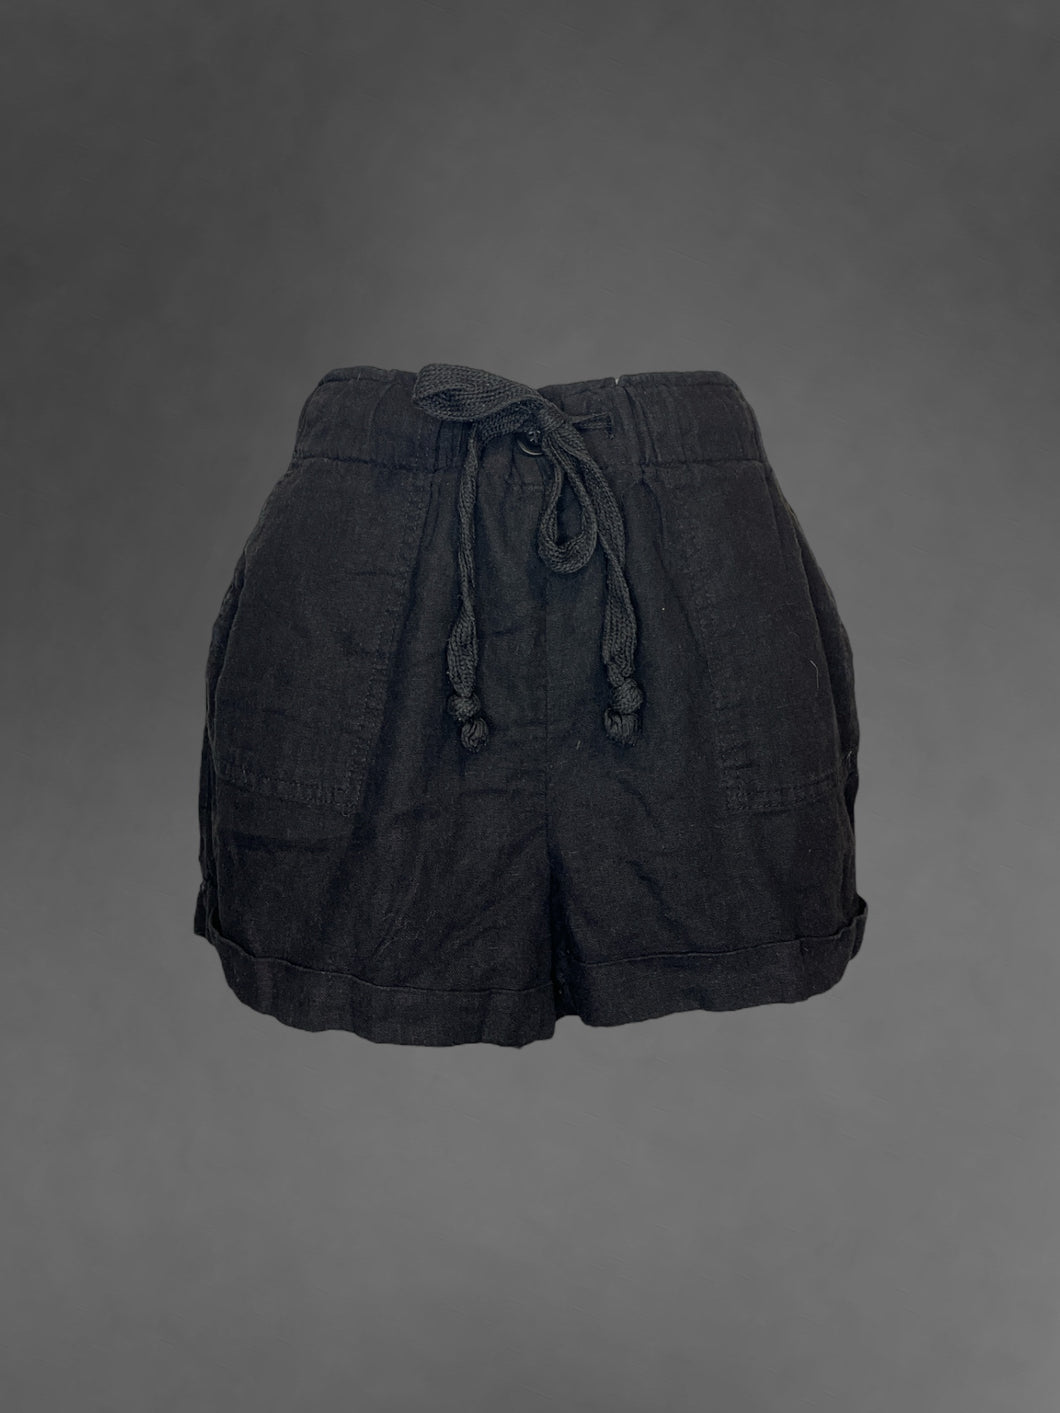 XXS Black high waisted shorts w/ elastic drawstring waist, pockets, button detail, & cuffed hem